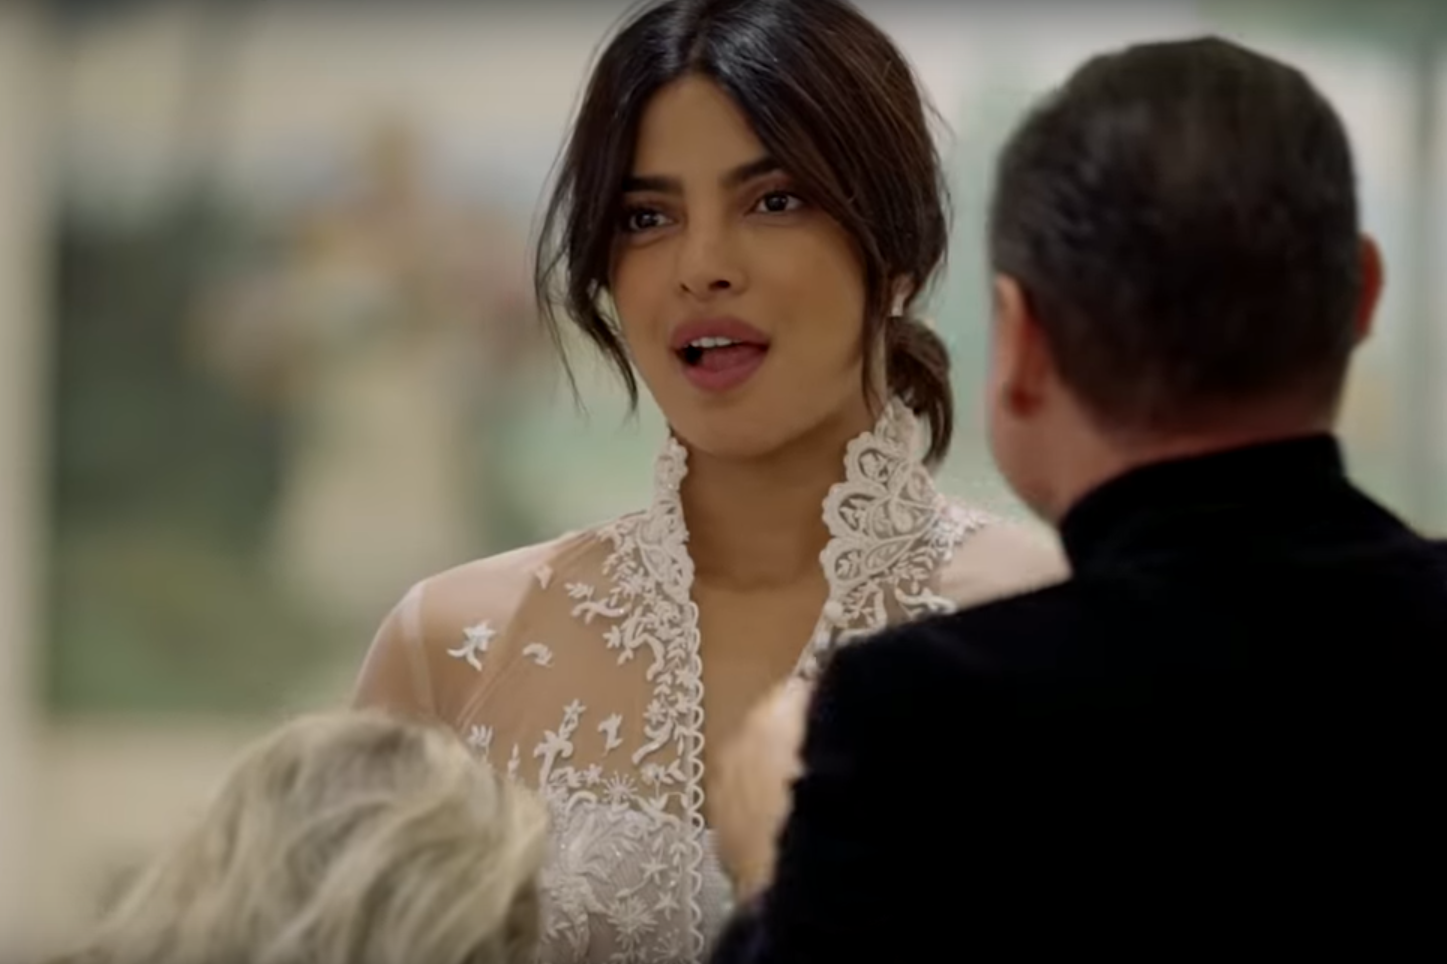 Priyanka Chopra reacts to wedding dress in behind-the-scenes video